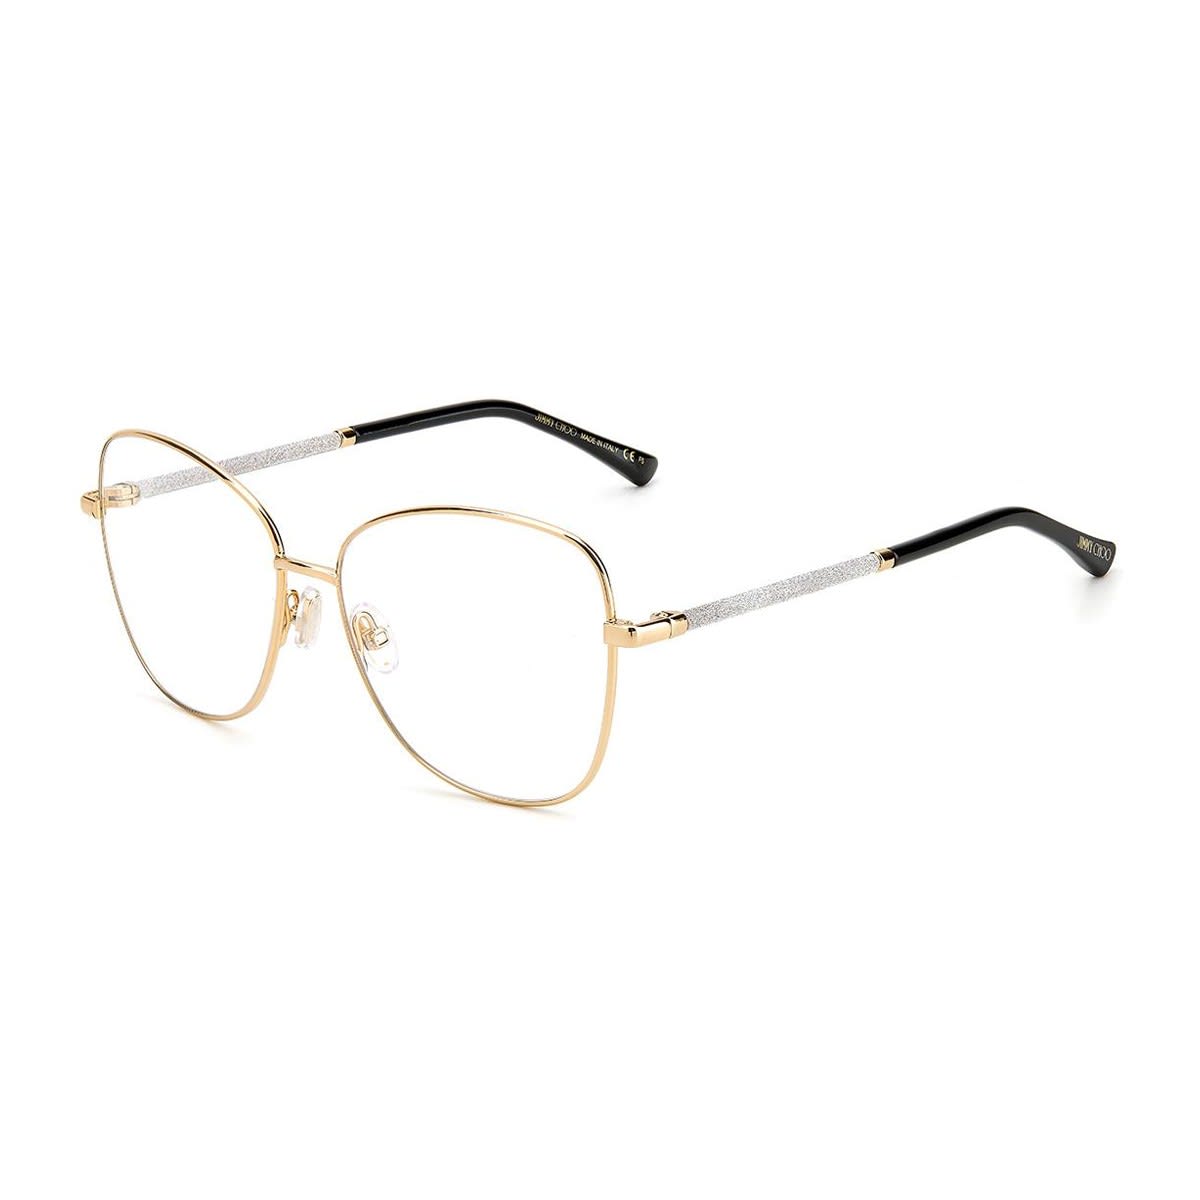 Jimmy Choo Eyewear Jc322 Glasses